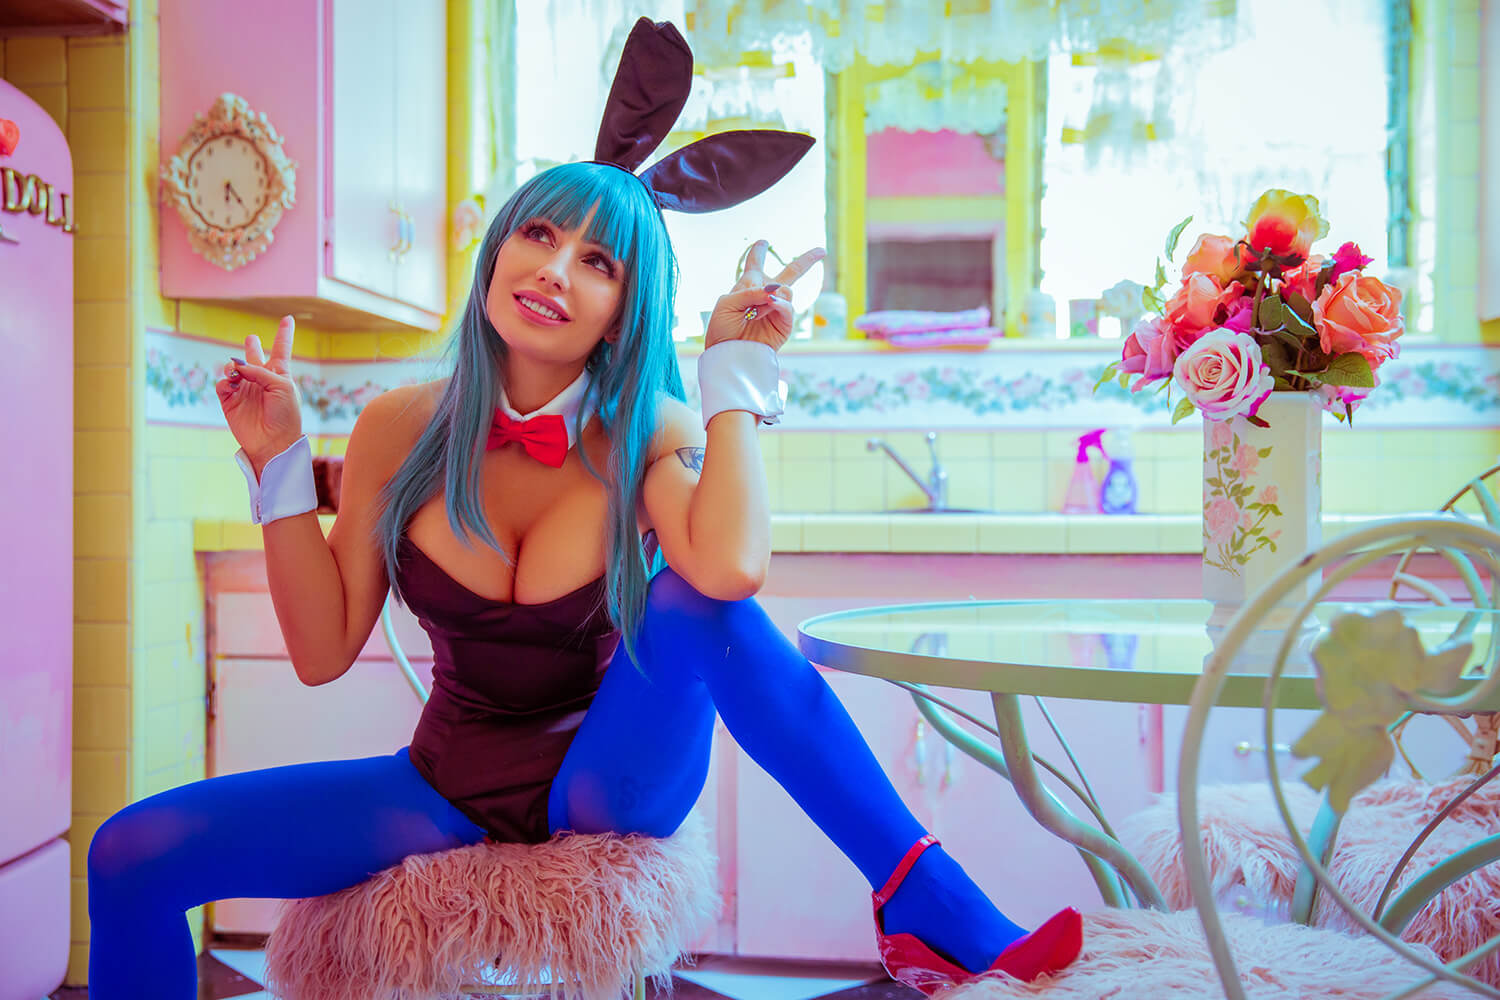 Bunny bulma cosplay photo slide show free porn compilation